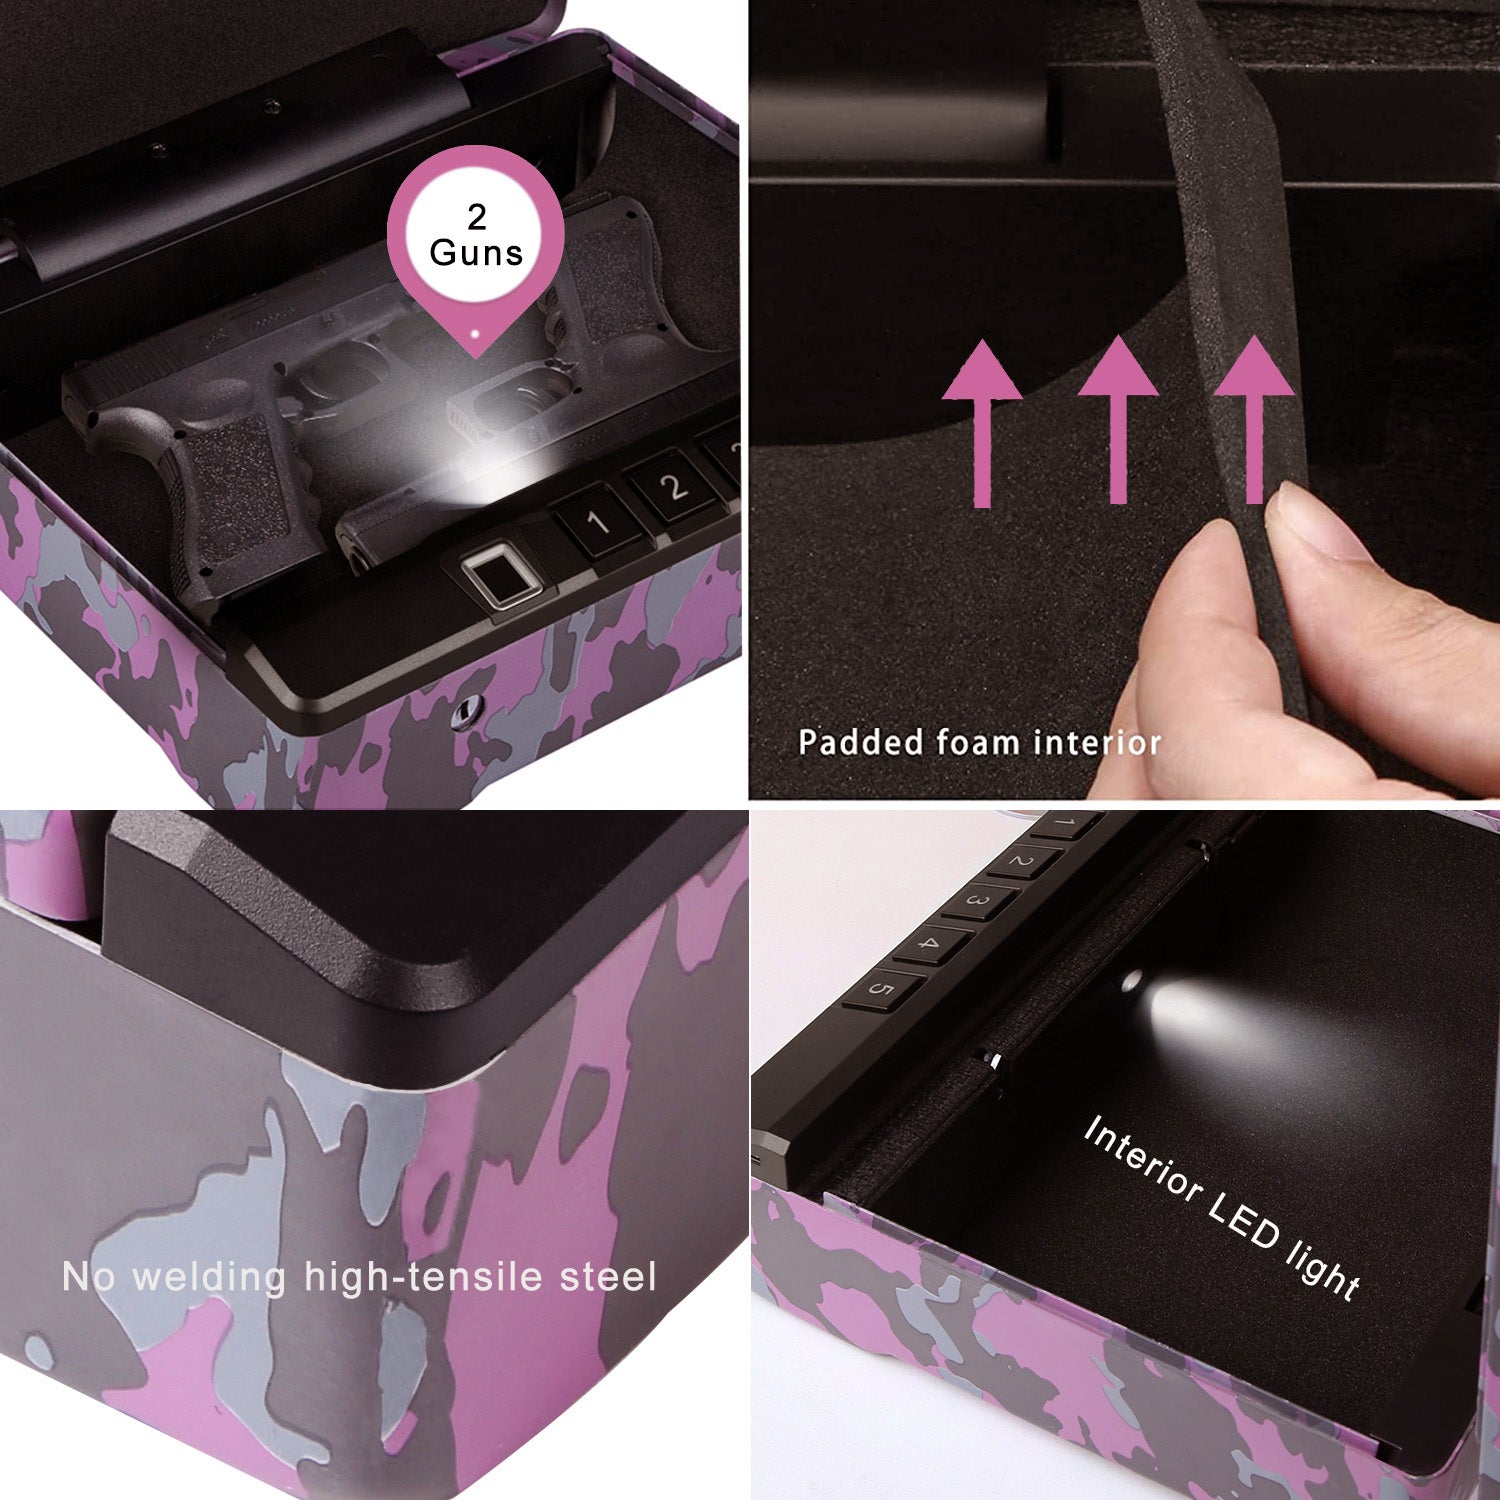 WINCENT Biometric Gun Safe for Pistols - Pink Camo